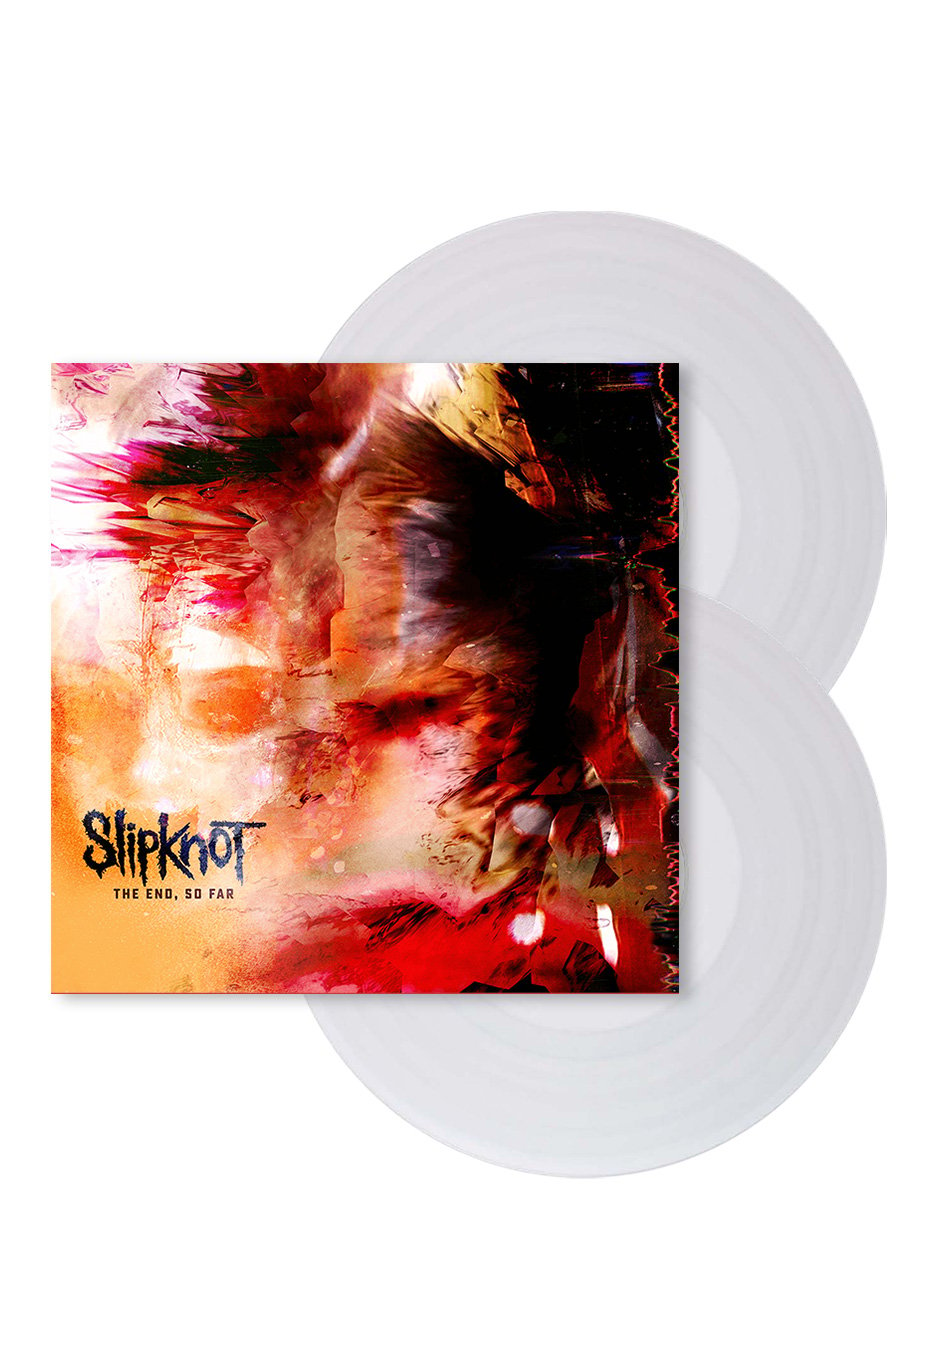 Slipknot - The End, So Far Ultra Clear - Colored 2 Vinyl